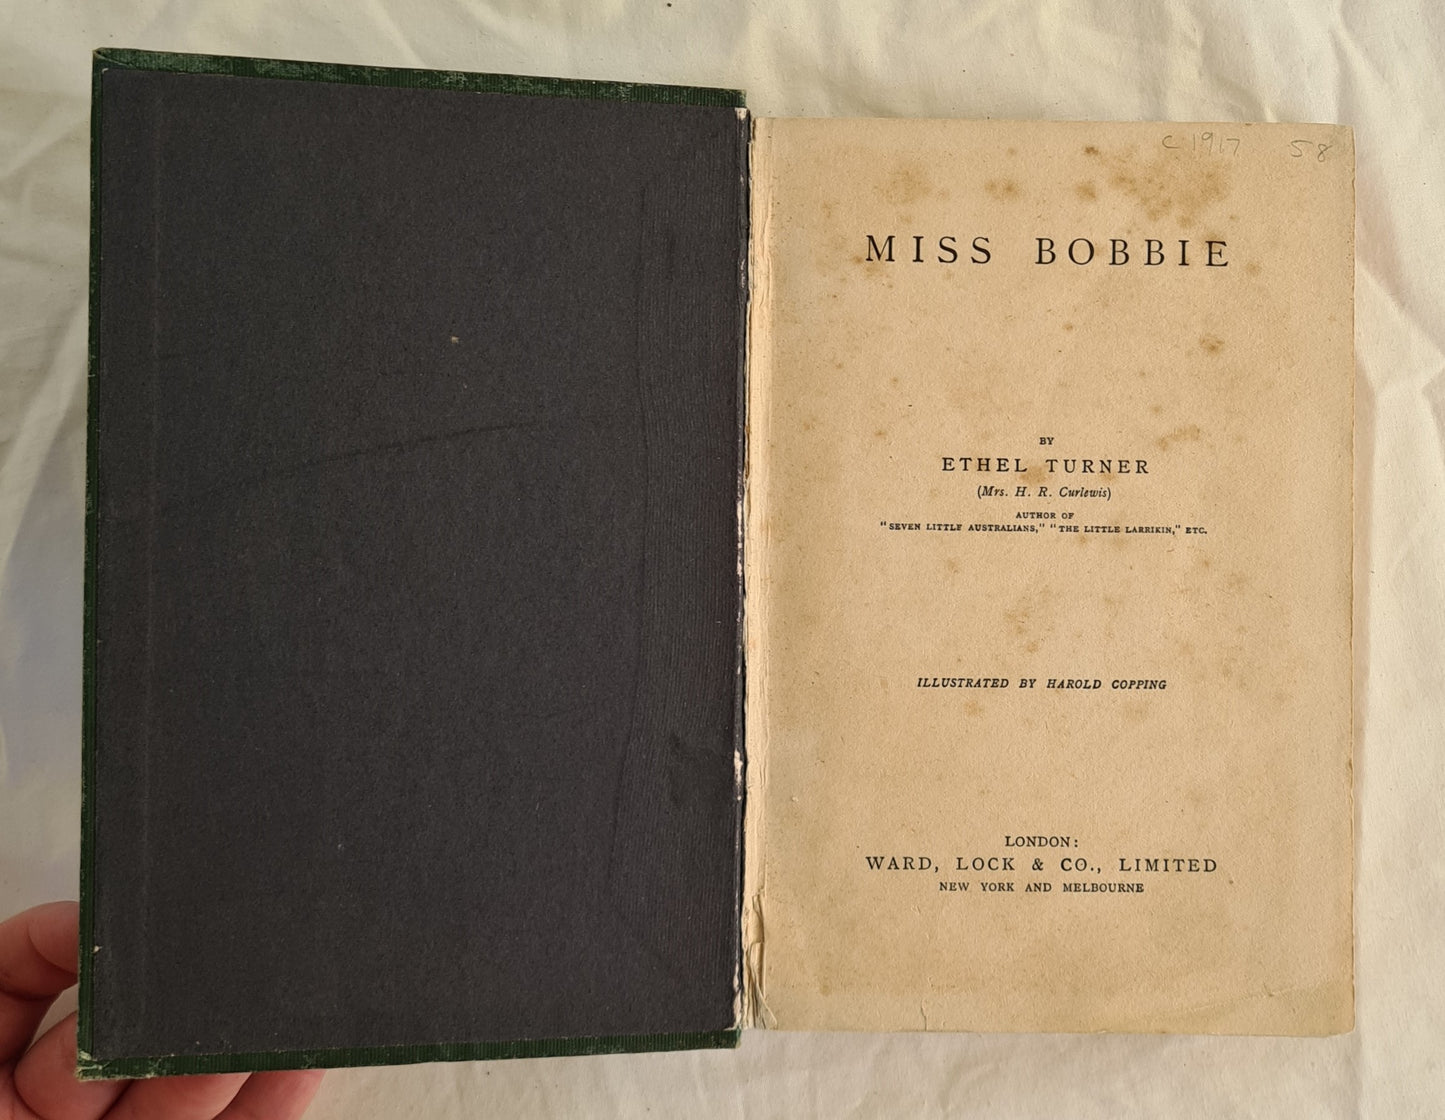 Miss Bobbie by Ethel Turner (c1910)